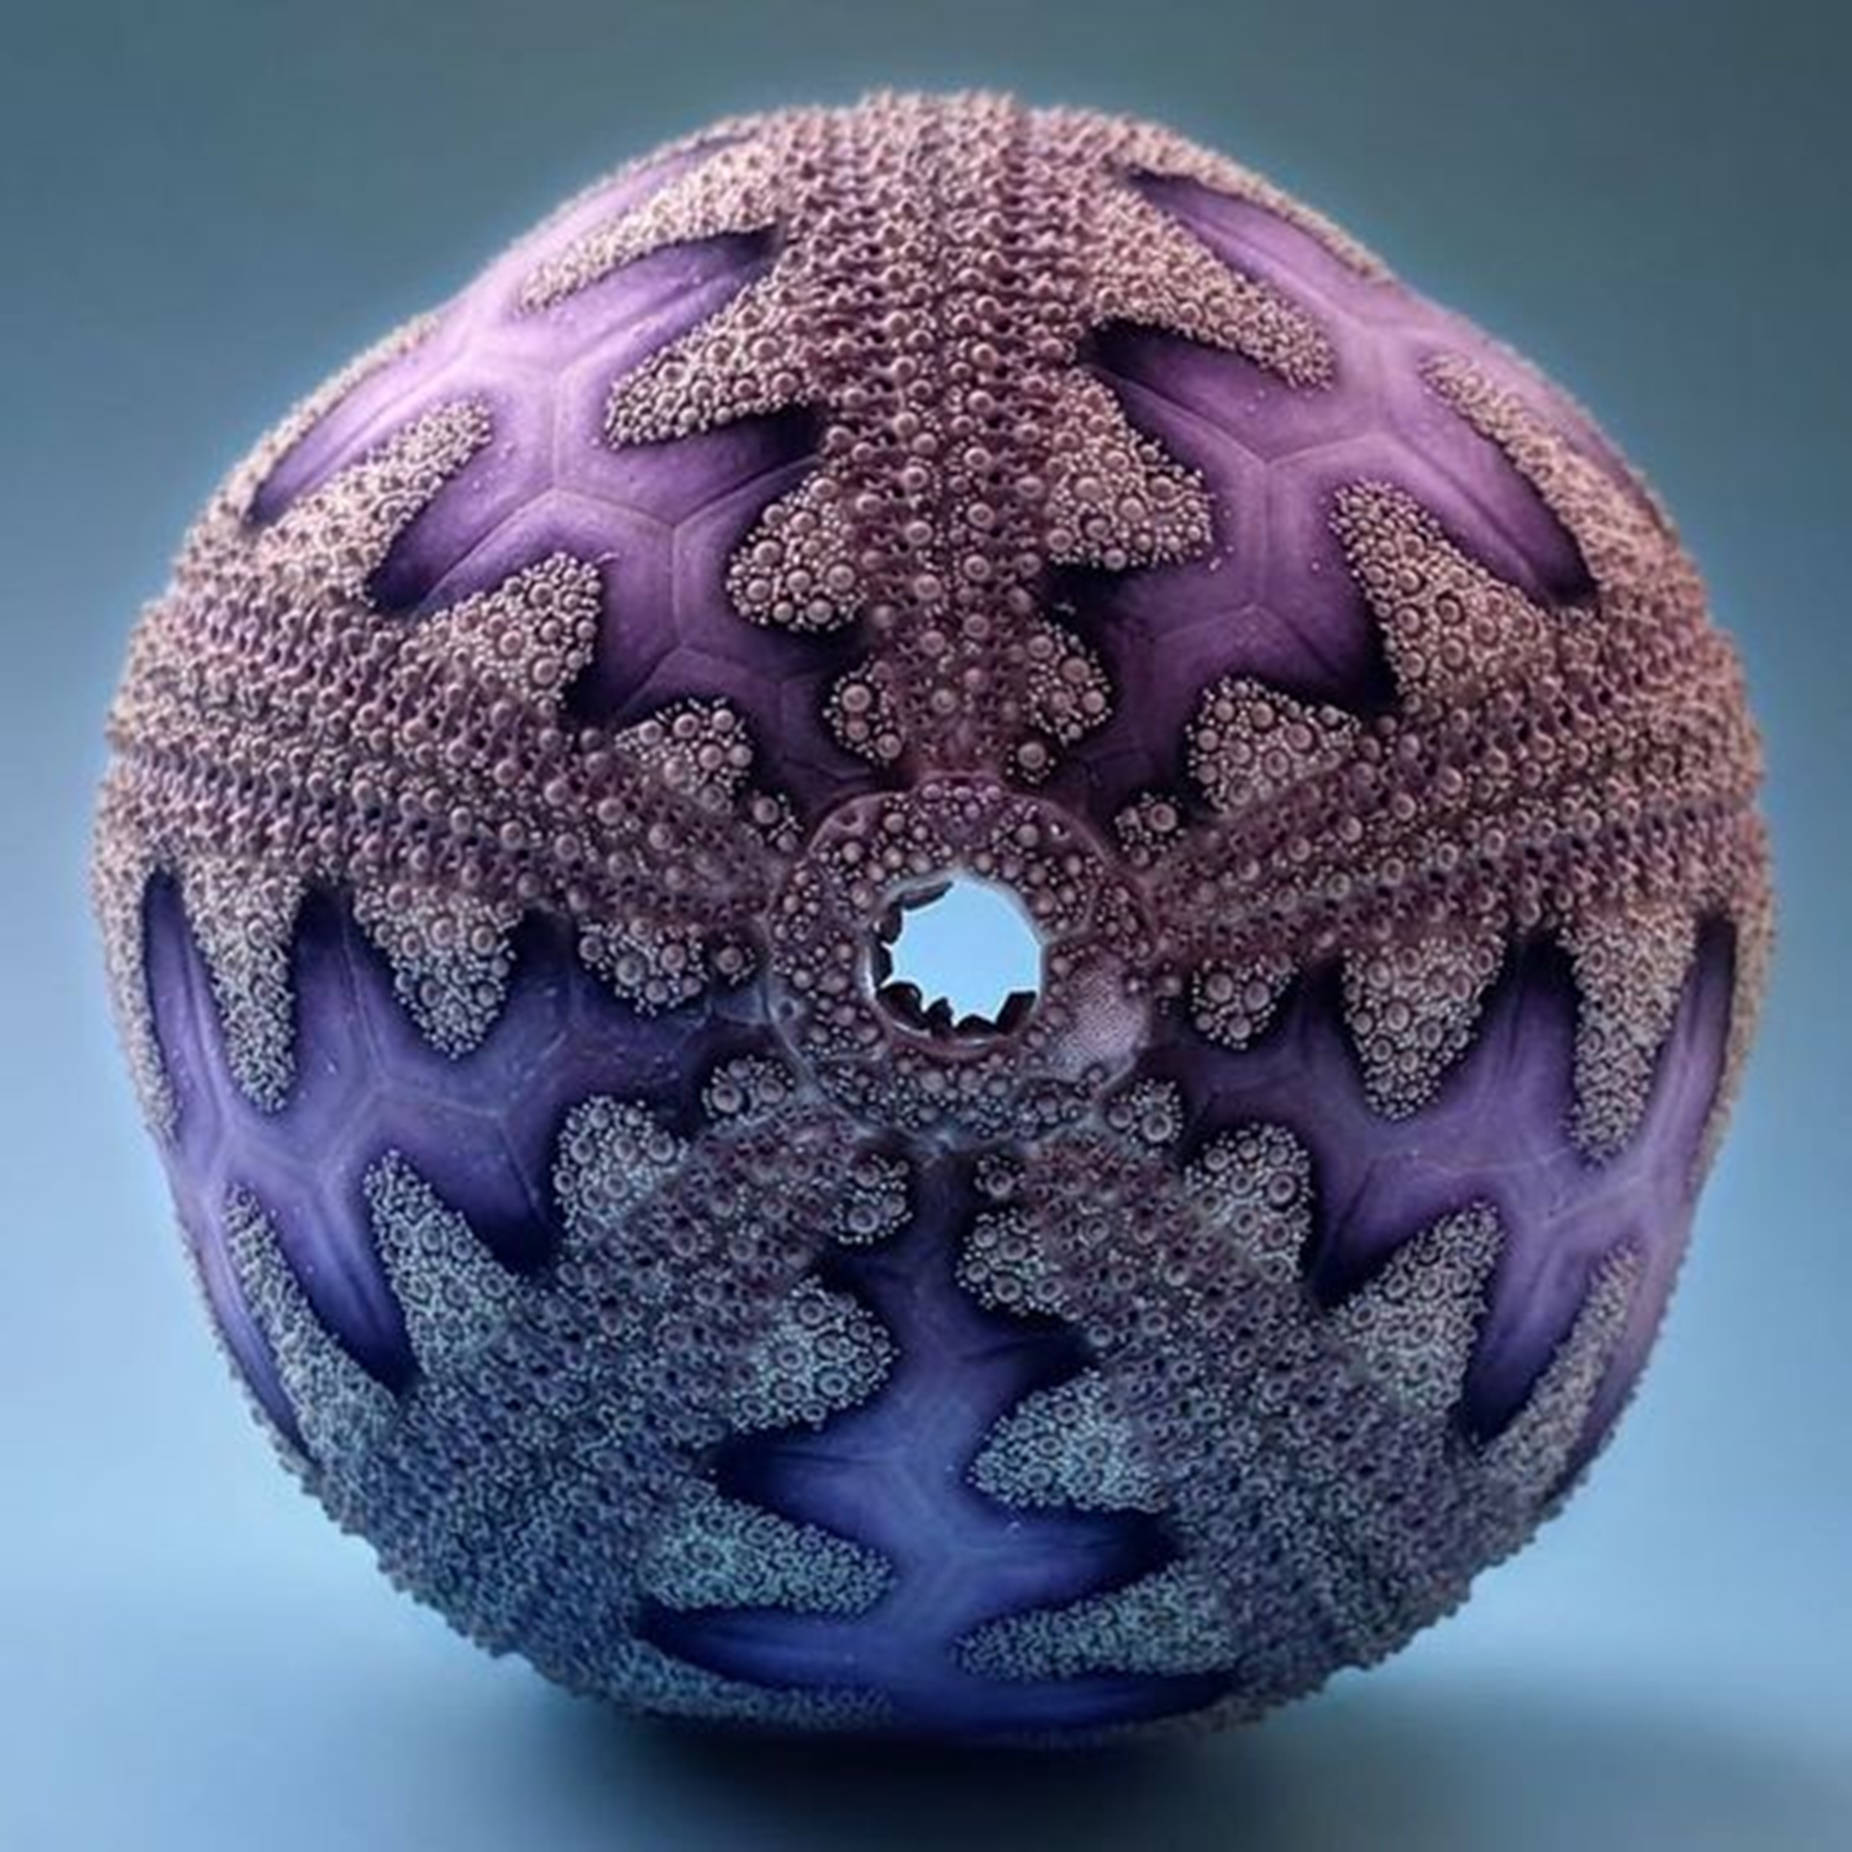 Spectacular Purple Sea Urchin Shell Wallpaper